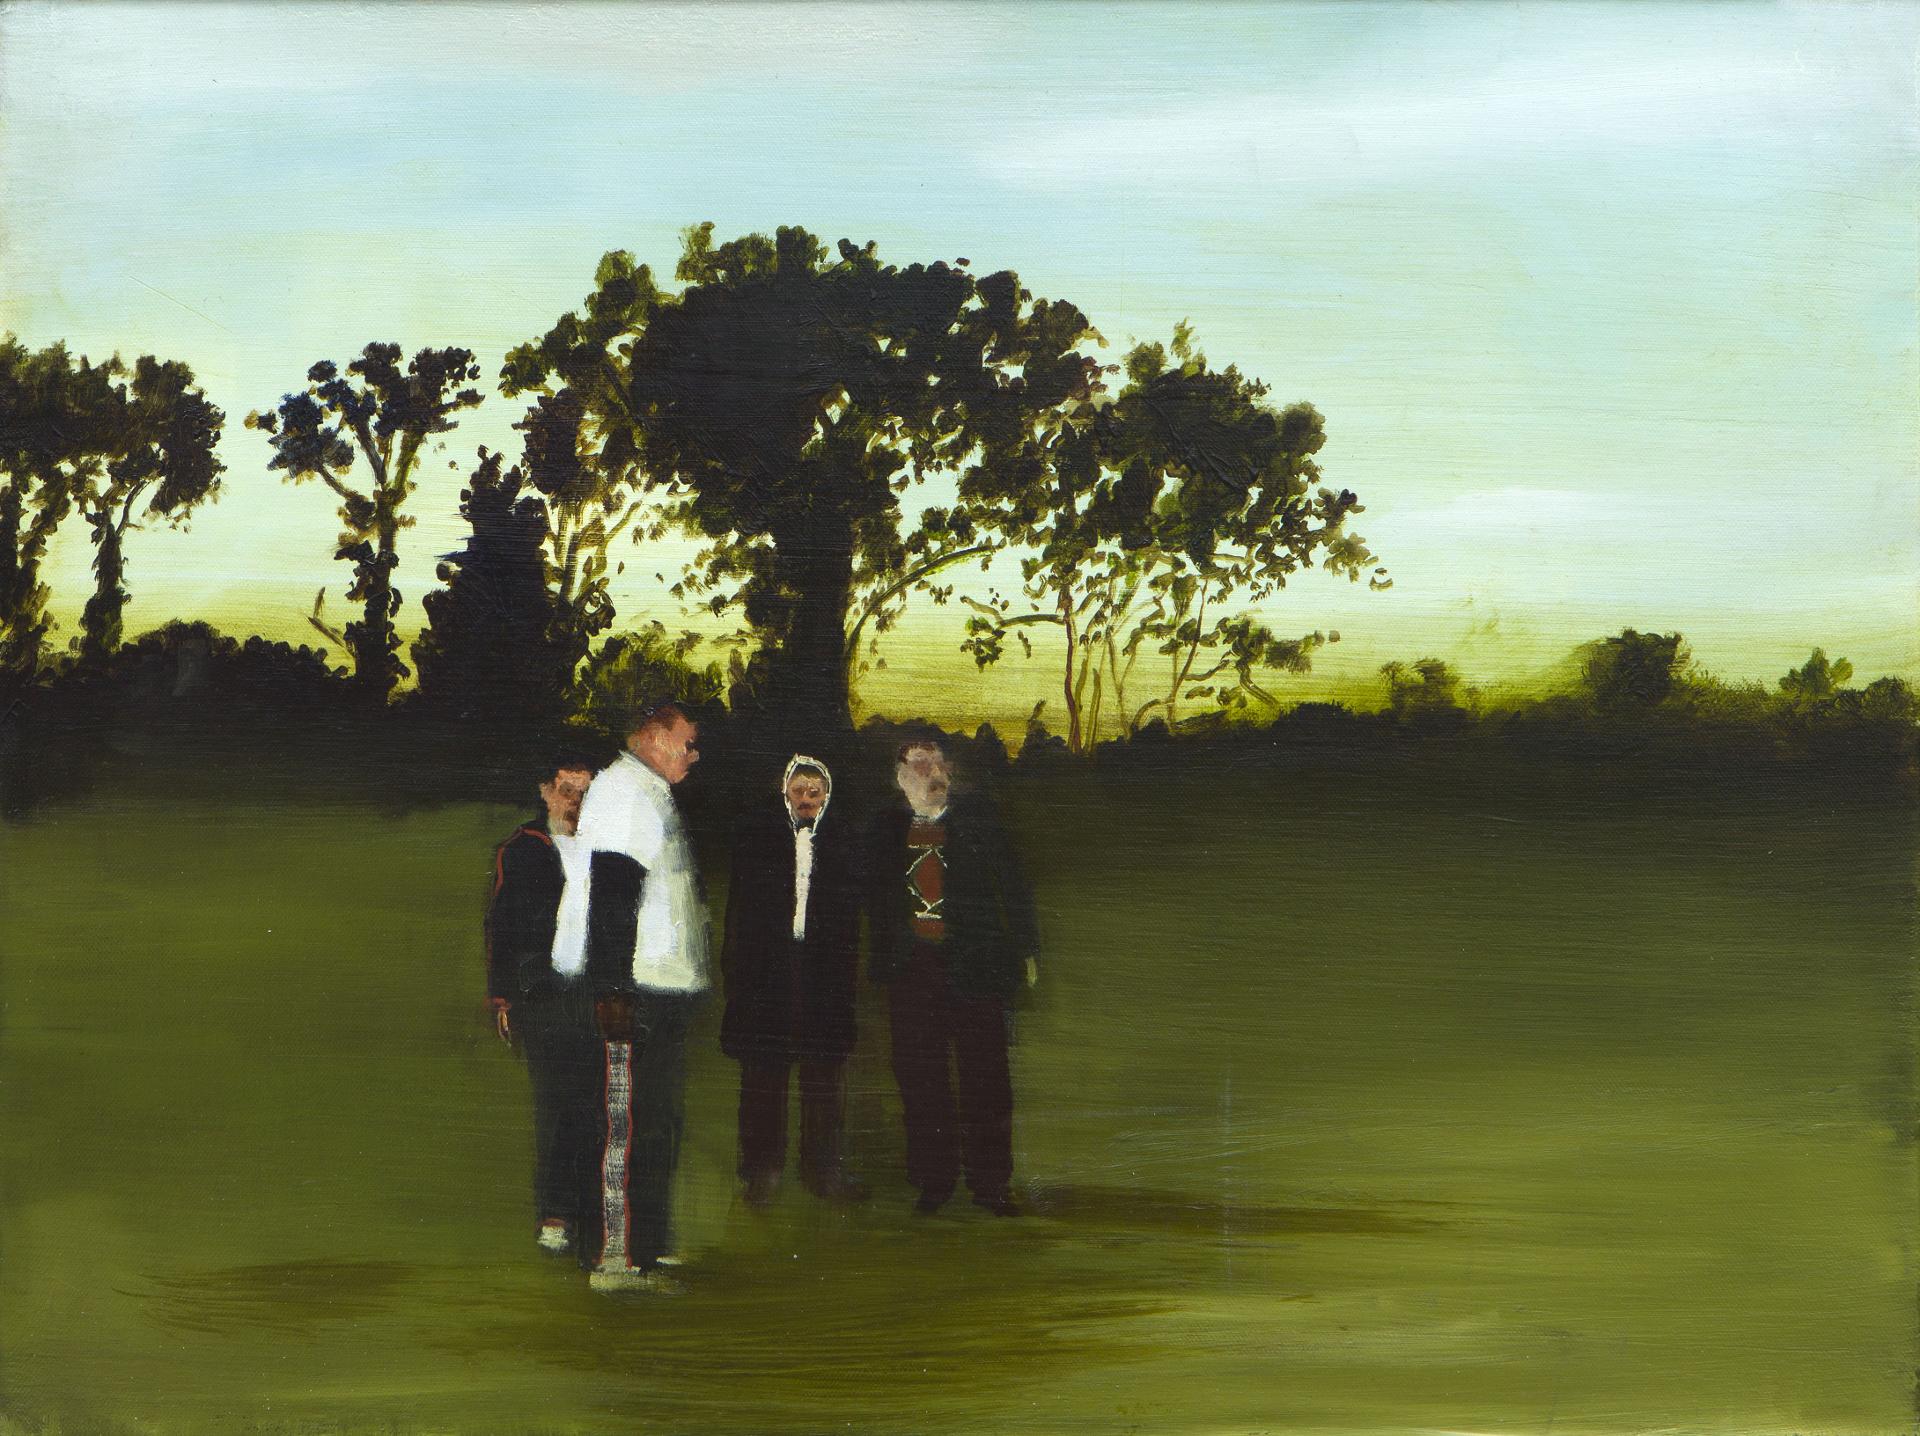 Michael Harrington (1964) - Meeting In A Park, 2007